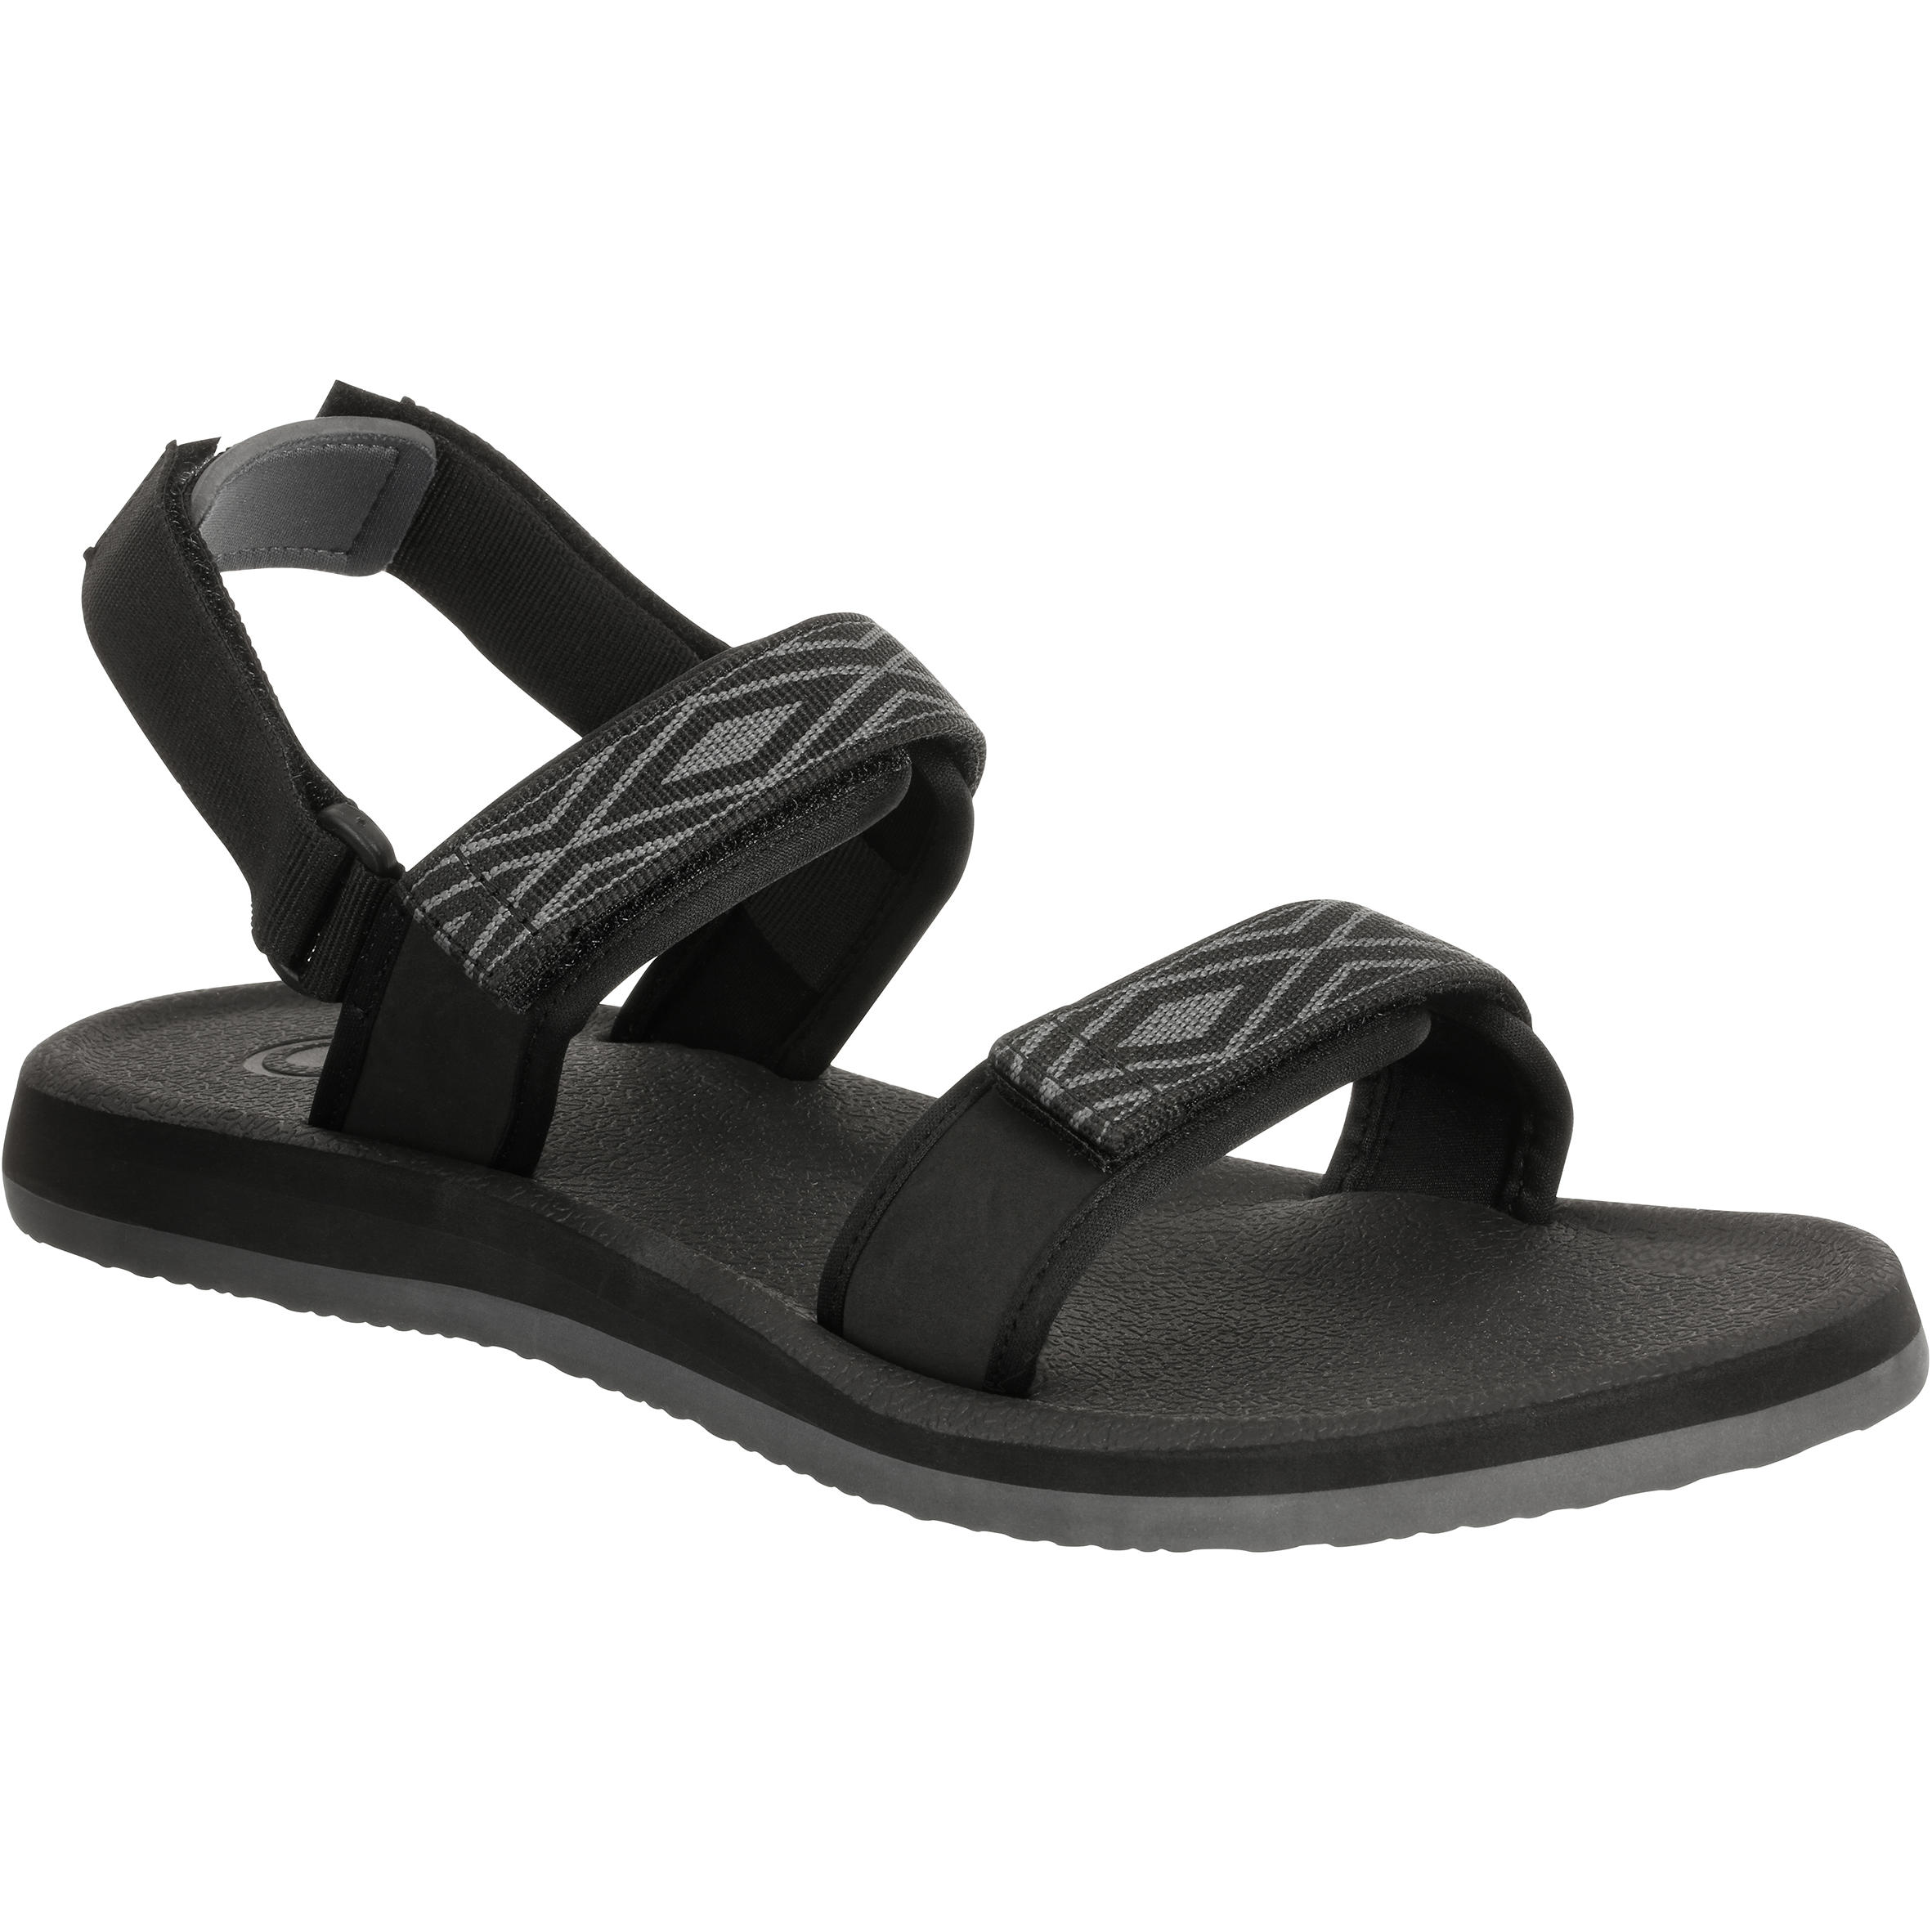 tribord sandals